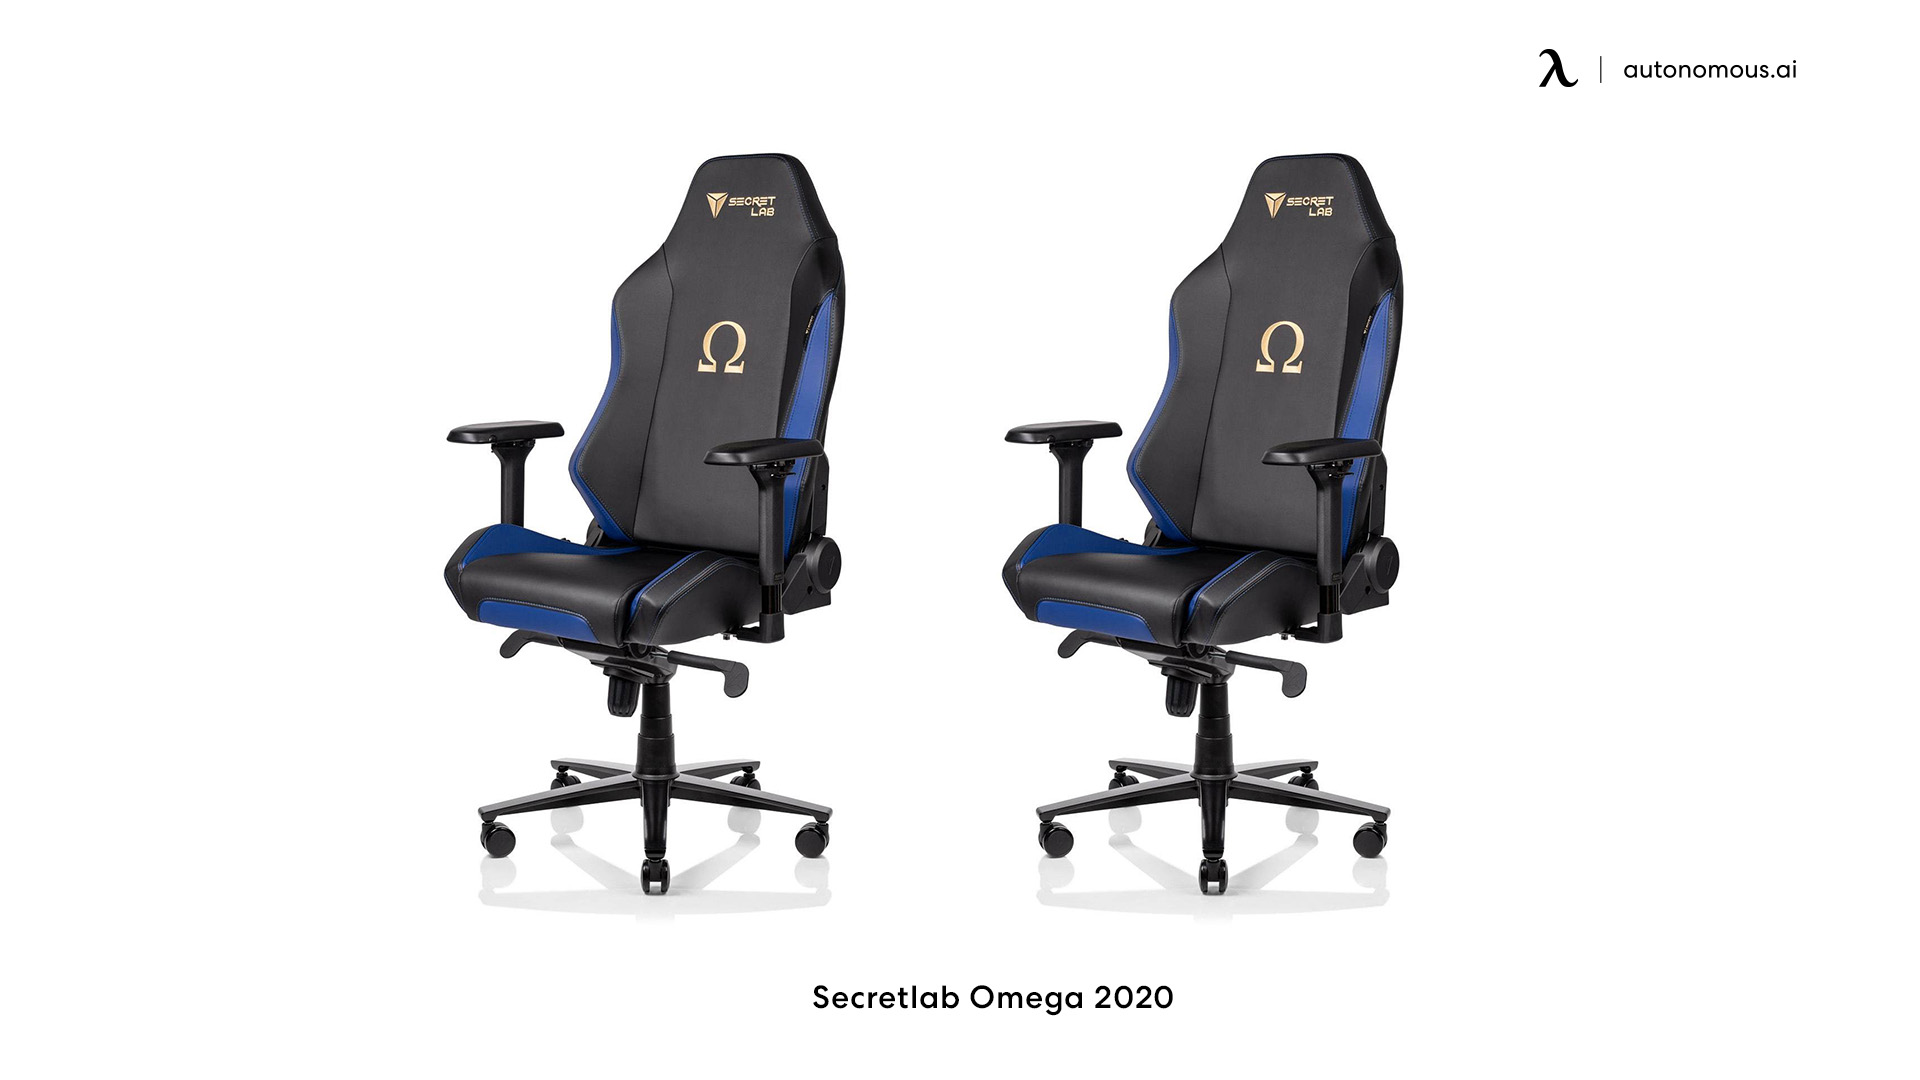 SecretLab Omega comfortable gaming chair